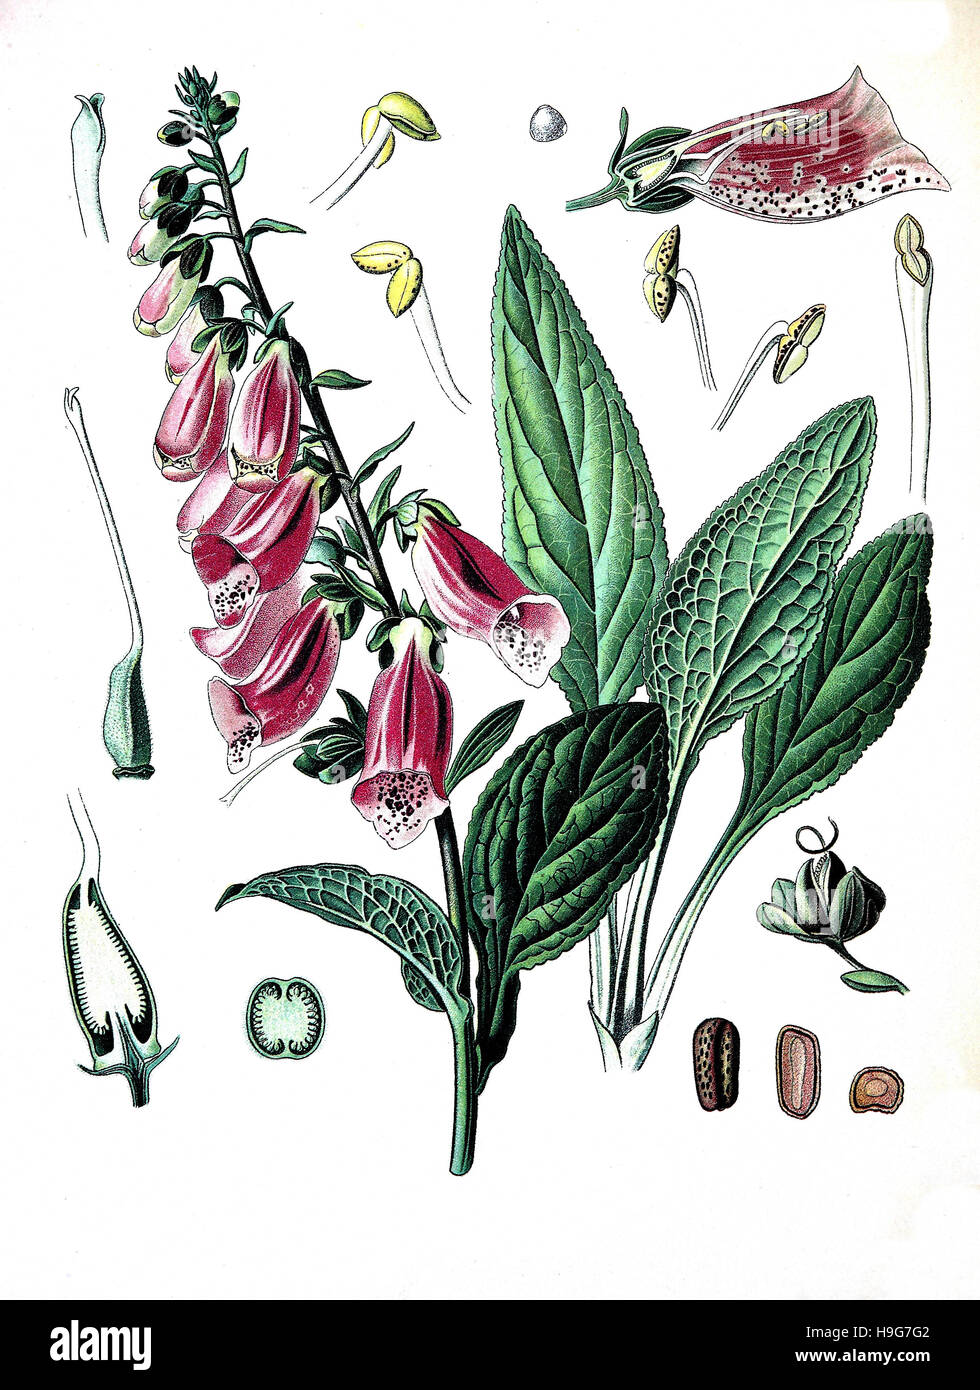 Digitalis purpurea, foxglove, common foxglove, purple foxglove or lady's glove, Medicinal plant Stock Photo